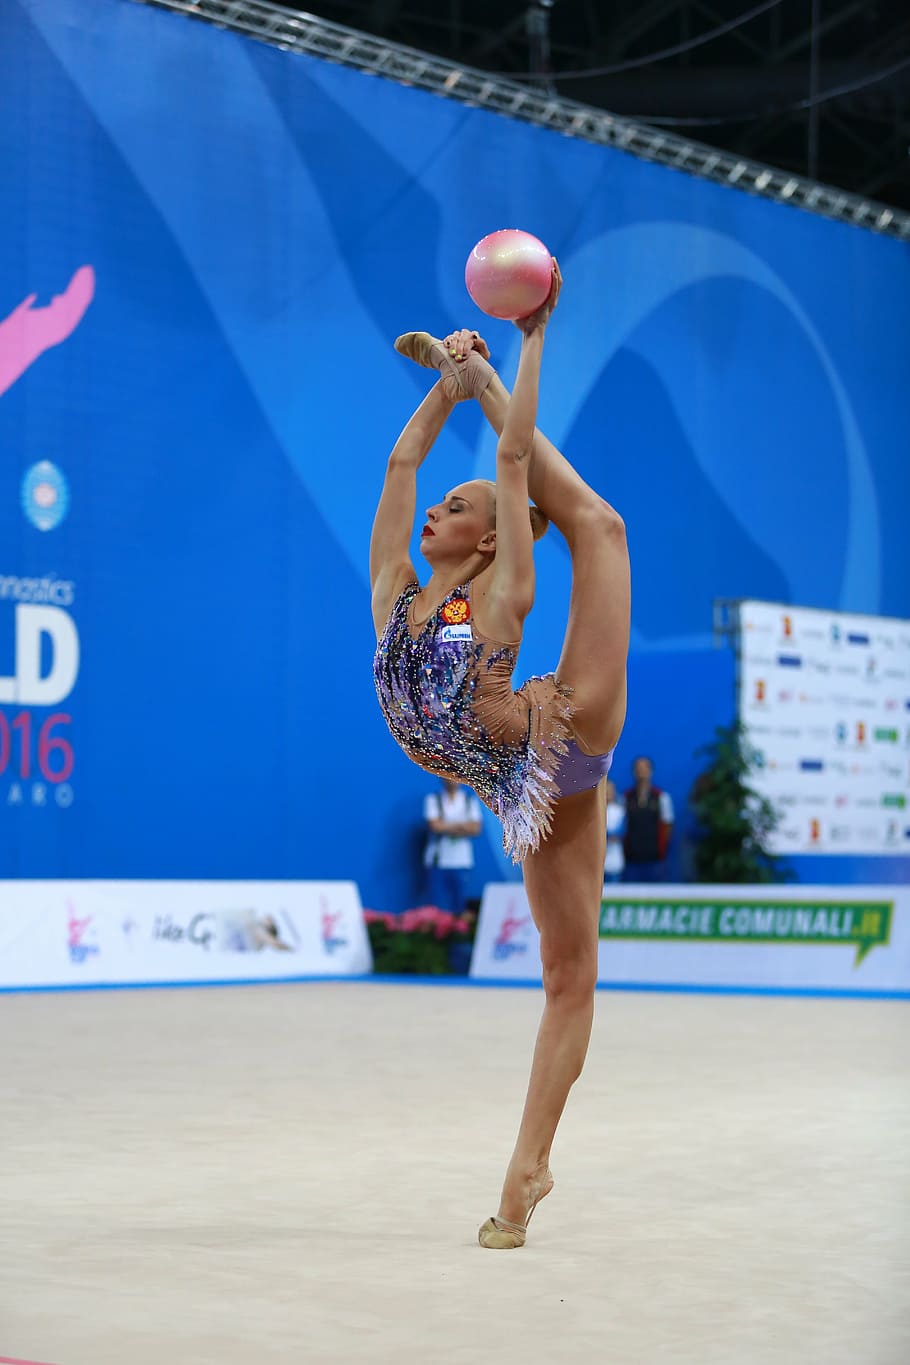 woman doing gymnast, gymnastics, rhythmic gymnastics, sport, race